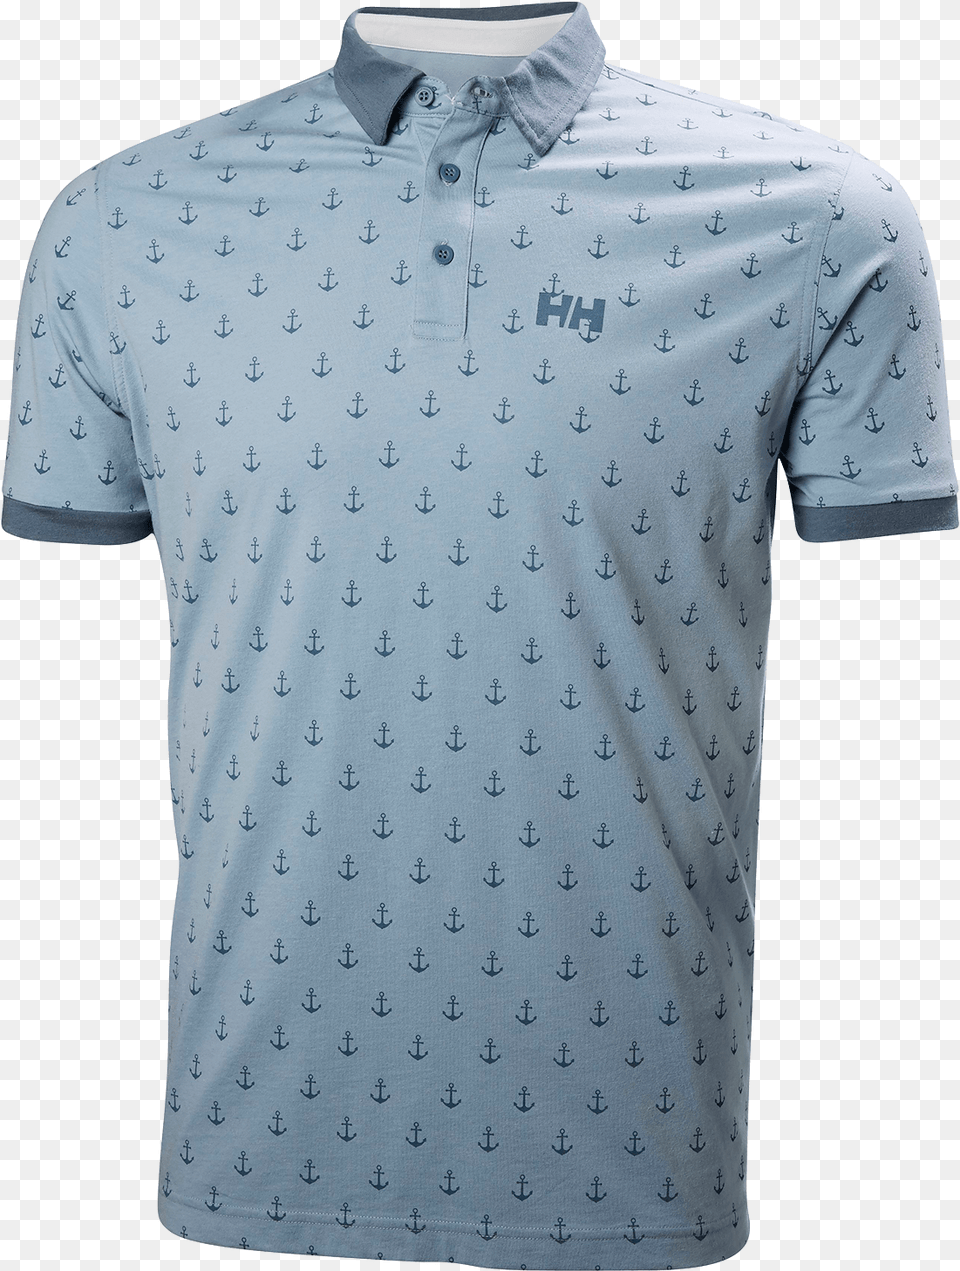 Polka Dot, Clothing, Shirt, T-shirt, Pattern Png